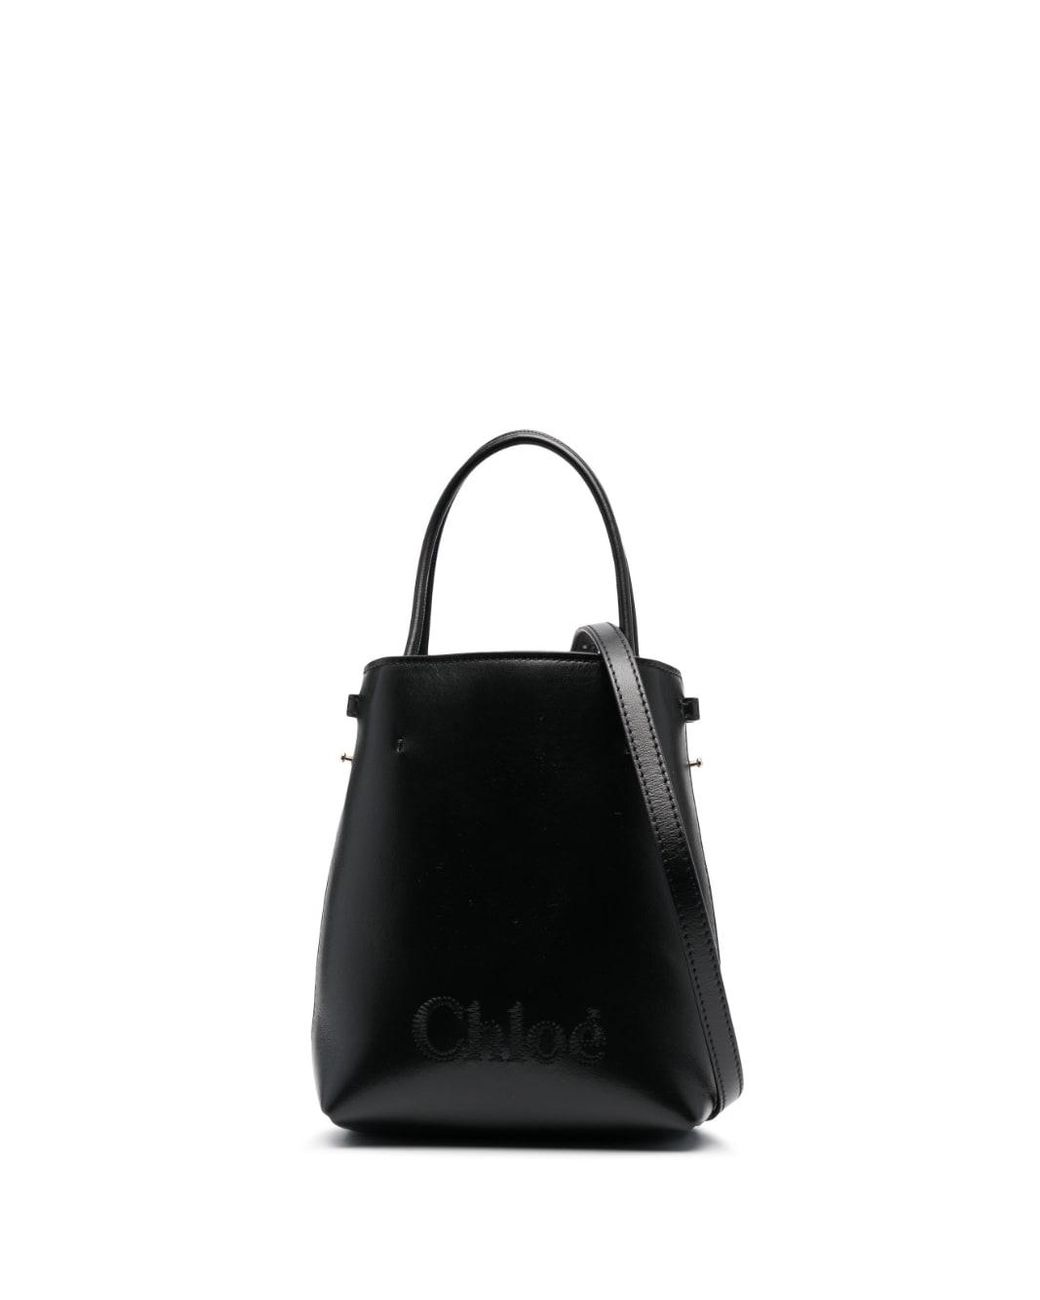 Chloé Sense Leather Bucket Bag in Black | Lyst